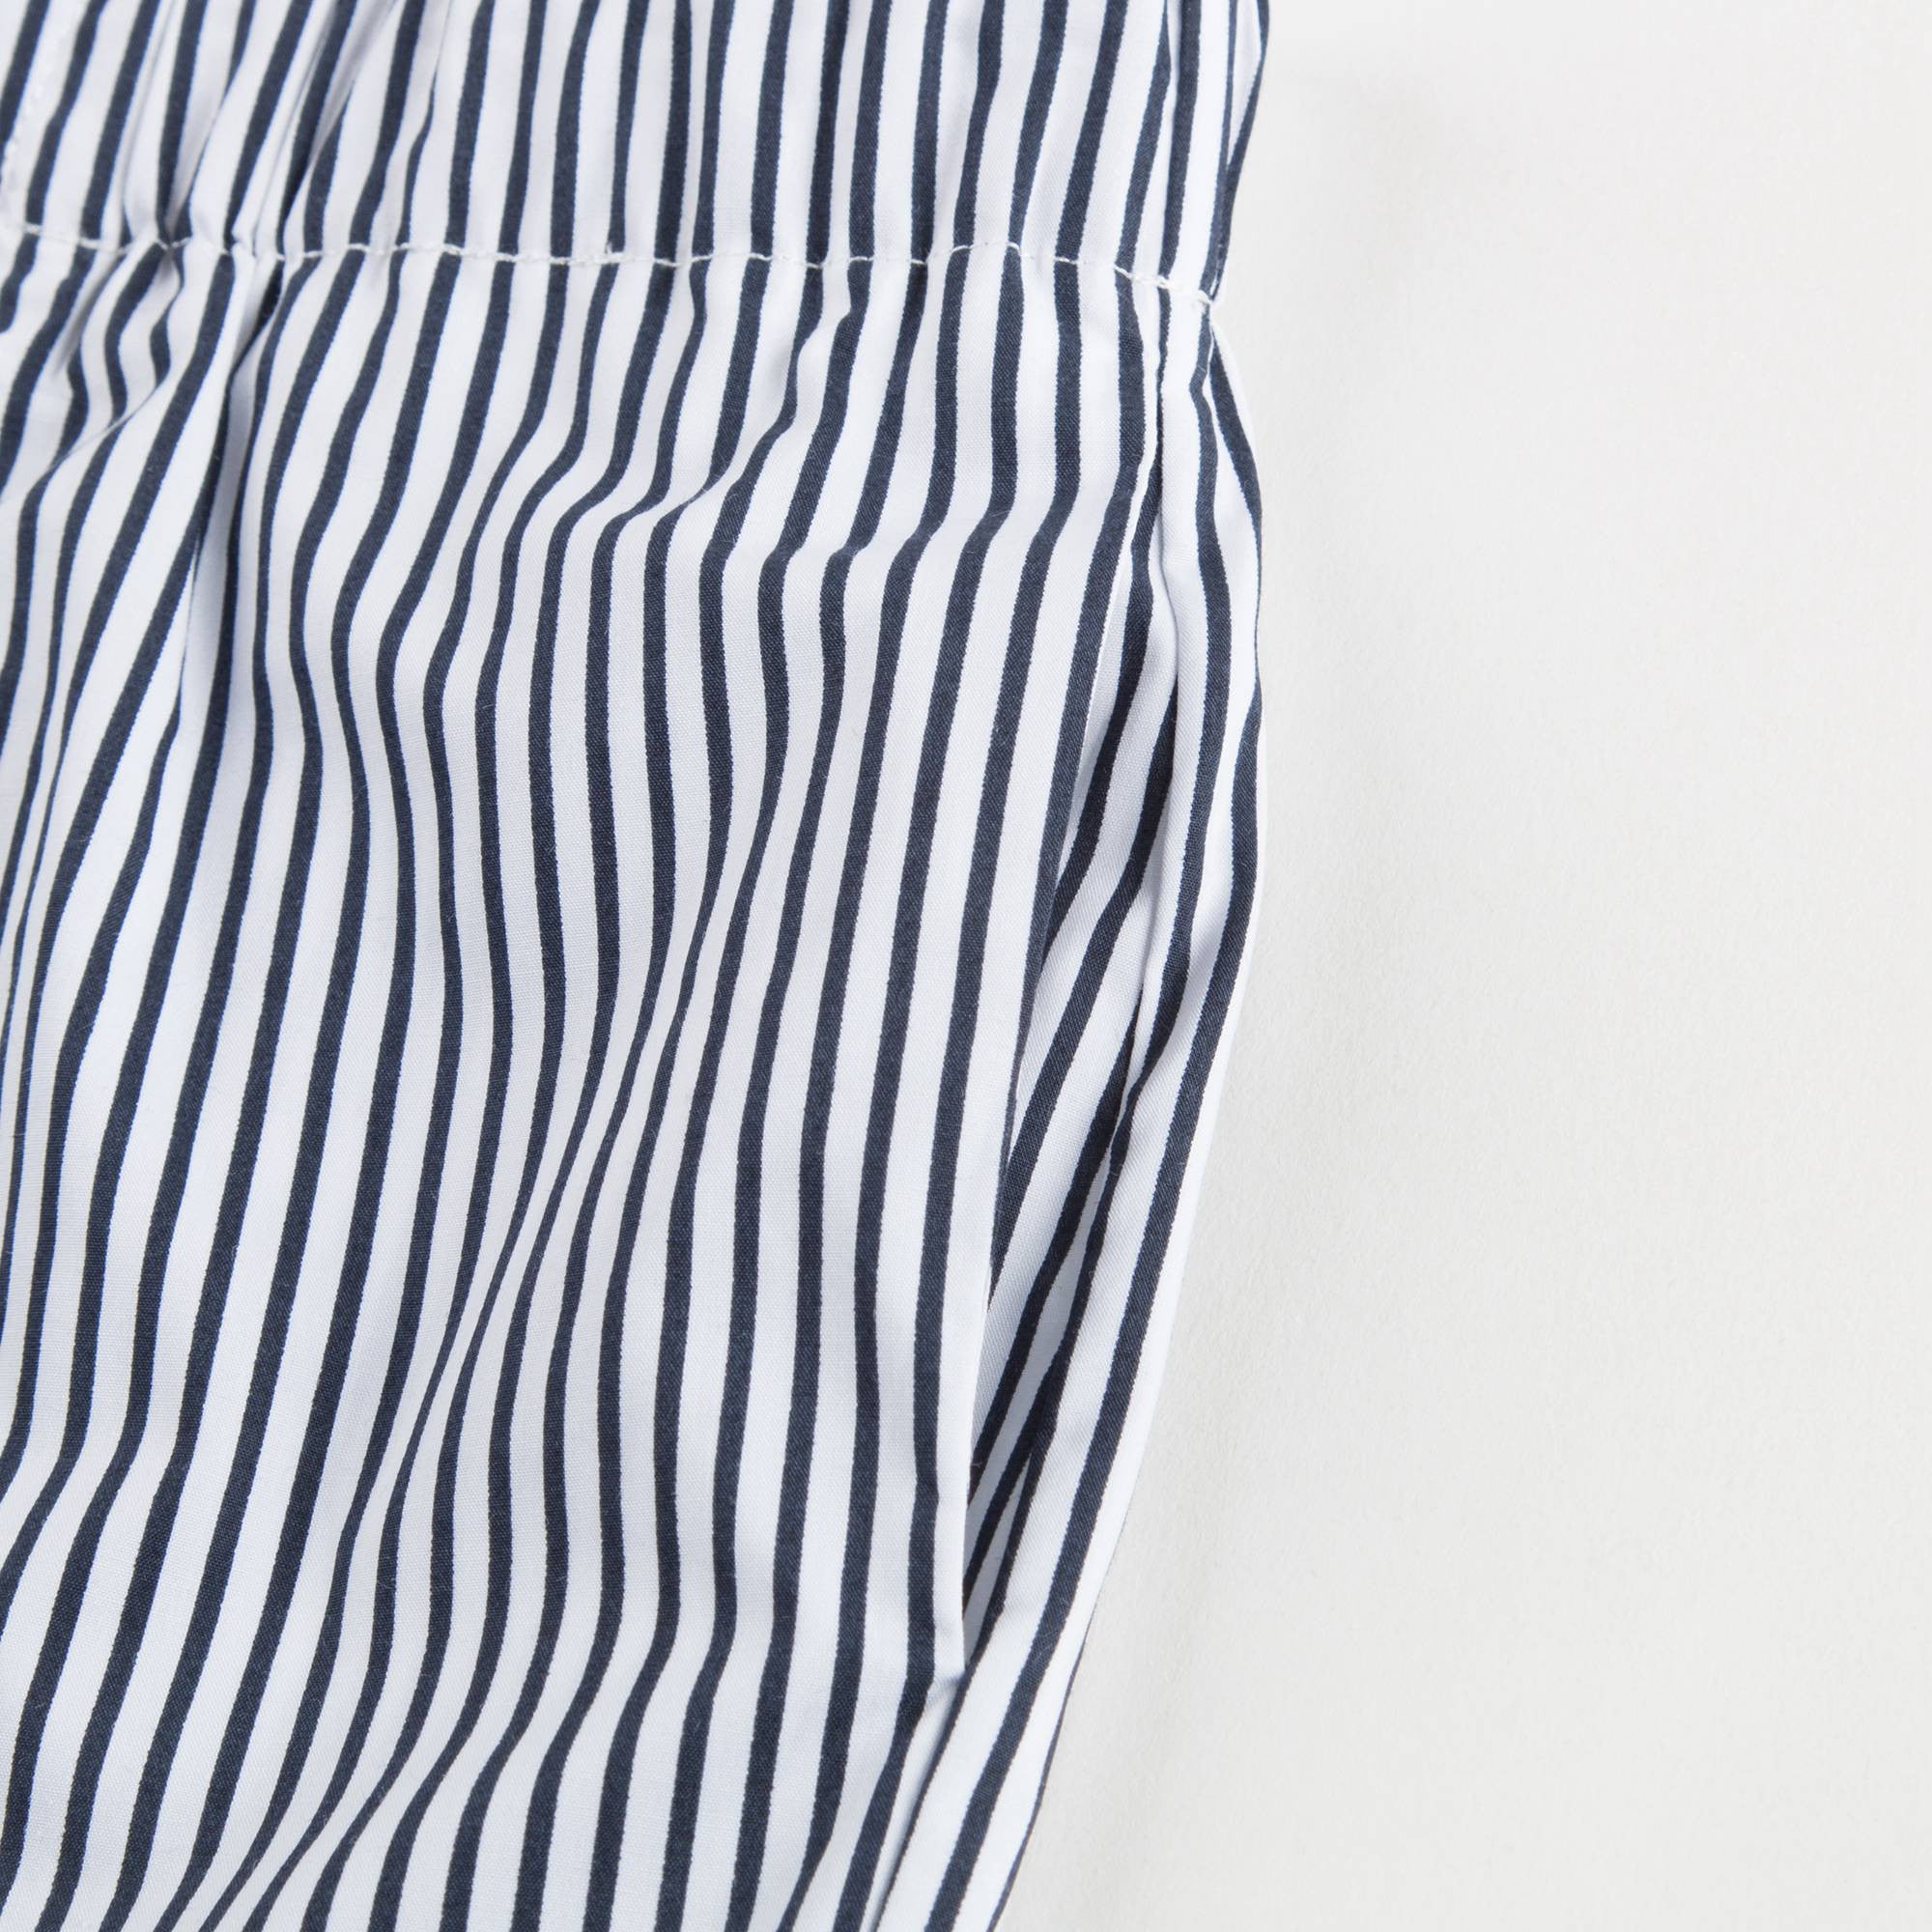 Girls Blue & White Striped Cotton Shorts